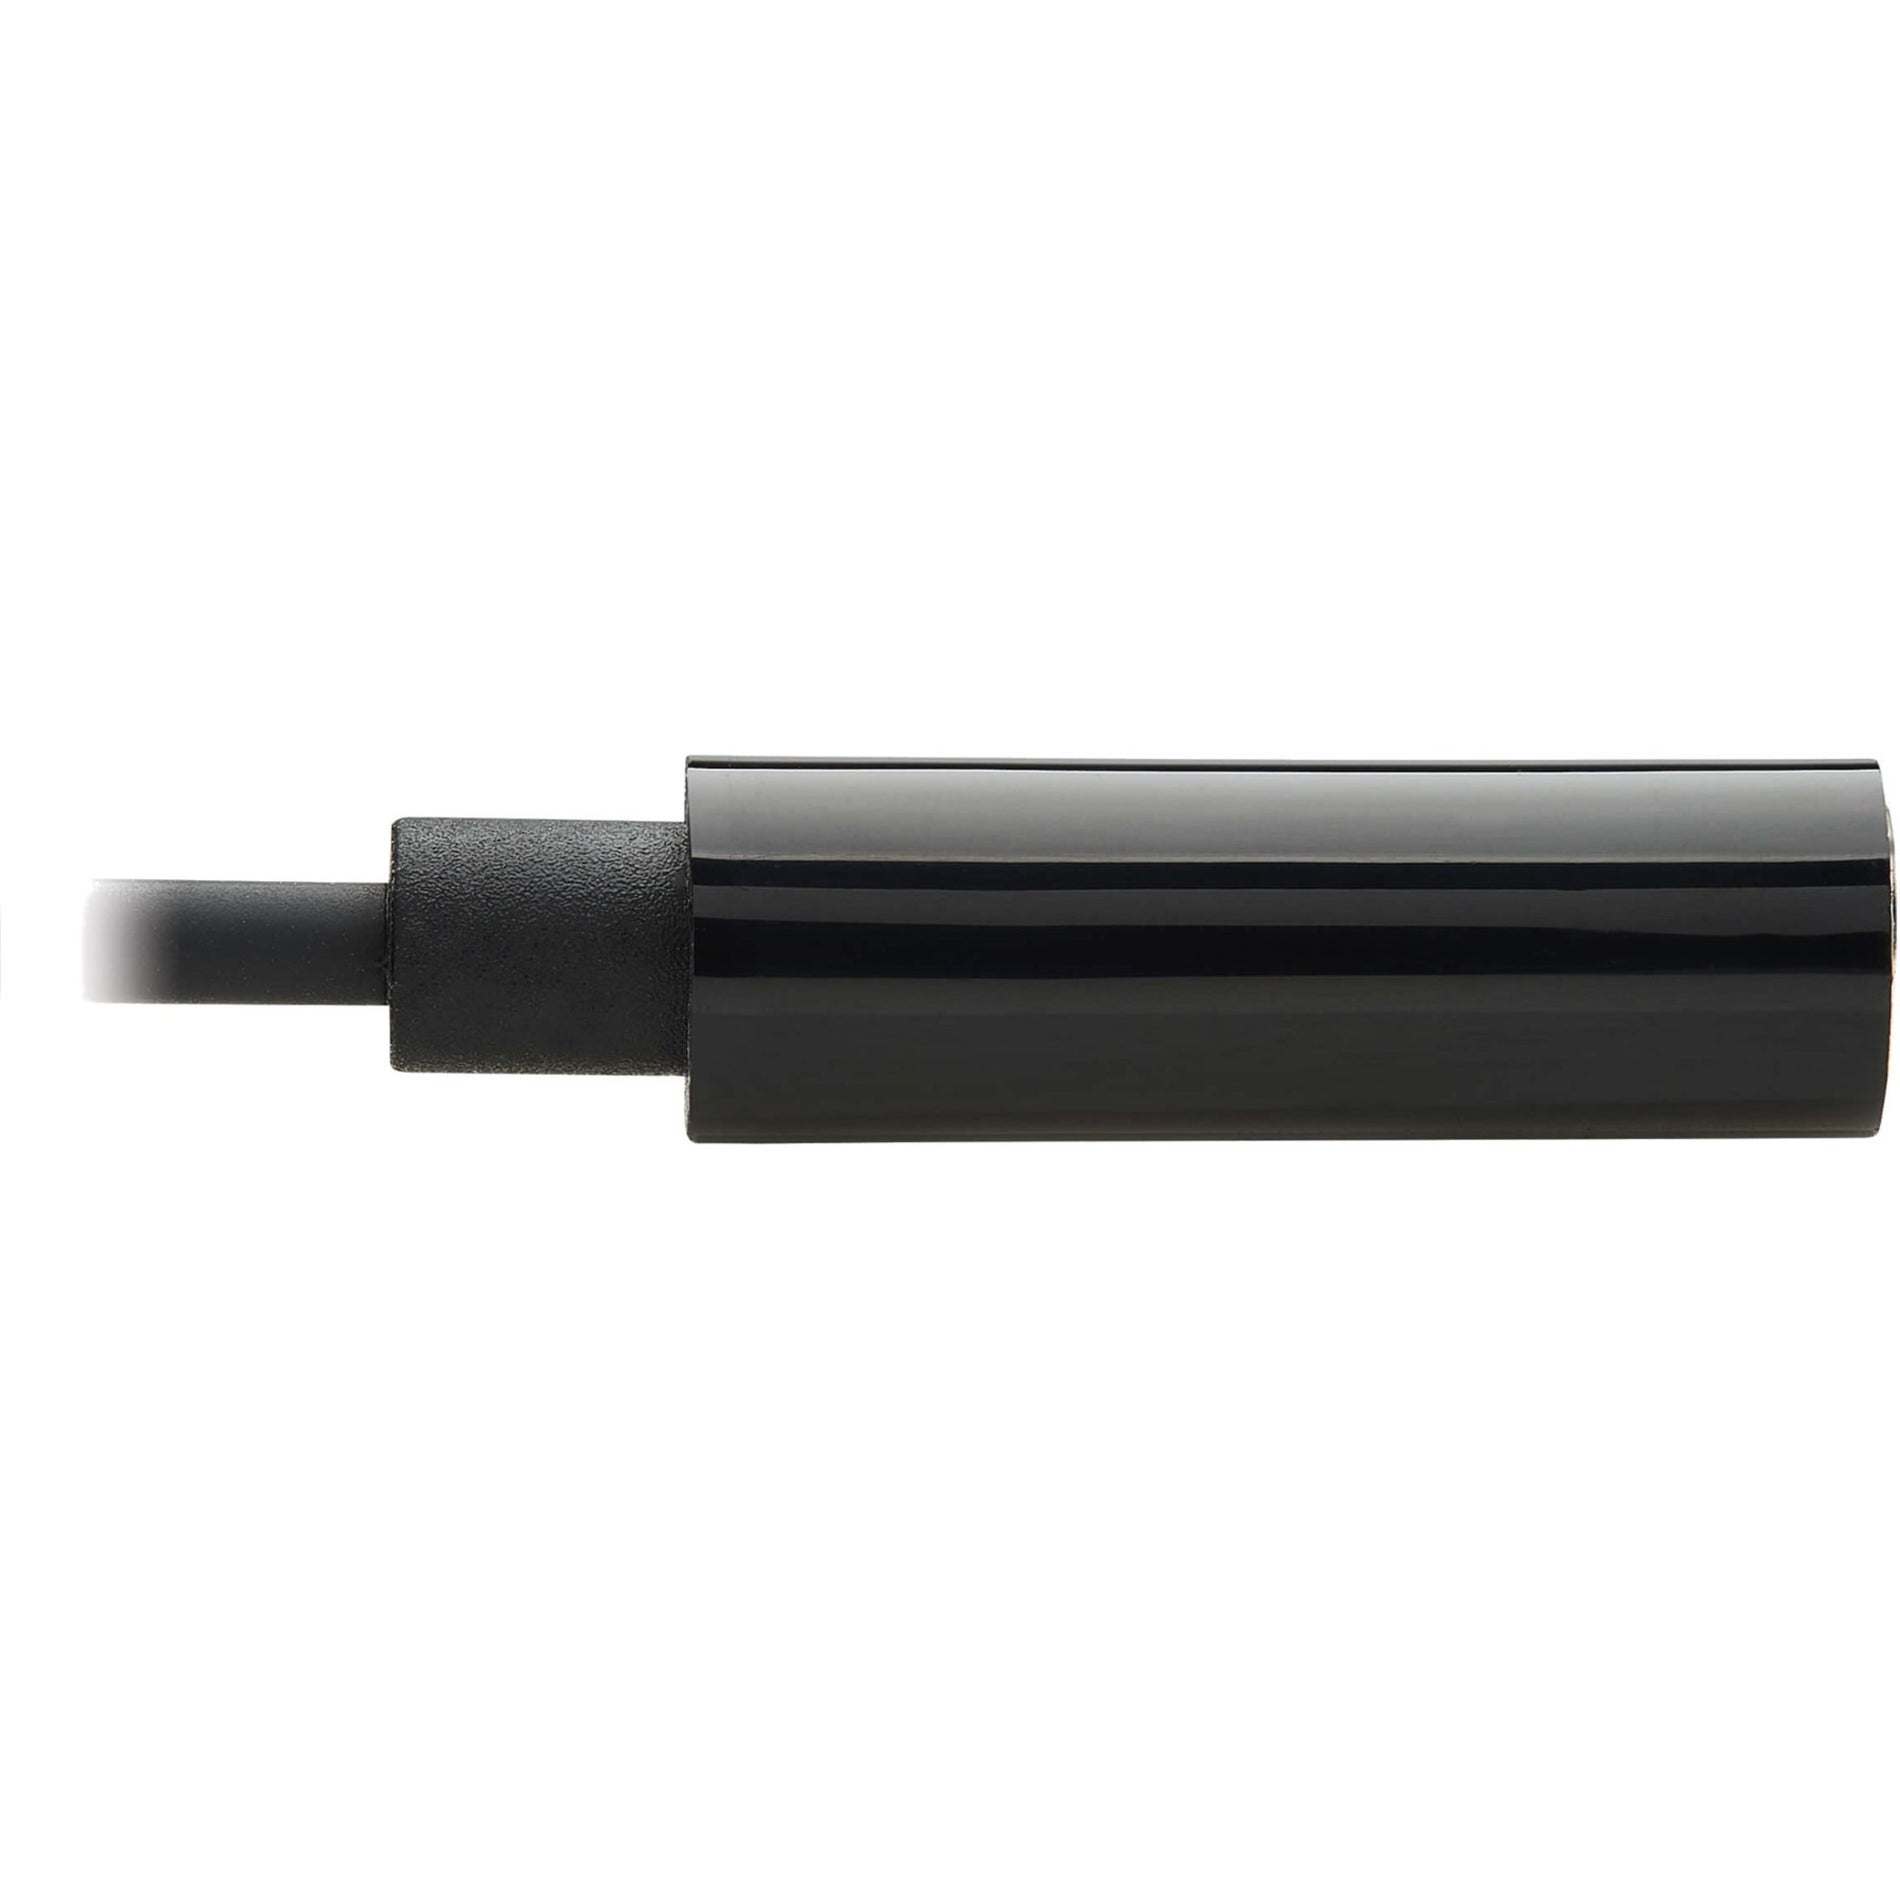 Tripp Lite U437-001 USB-C to 3.5 mm Headphone Jack Adapter Plug & Play 7.92" Cable Black  Tripp Lite U437-001 USB-C a 35 mm adattatore jack per cuffie Plug & Play Cavo da 792" Nero